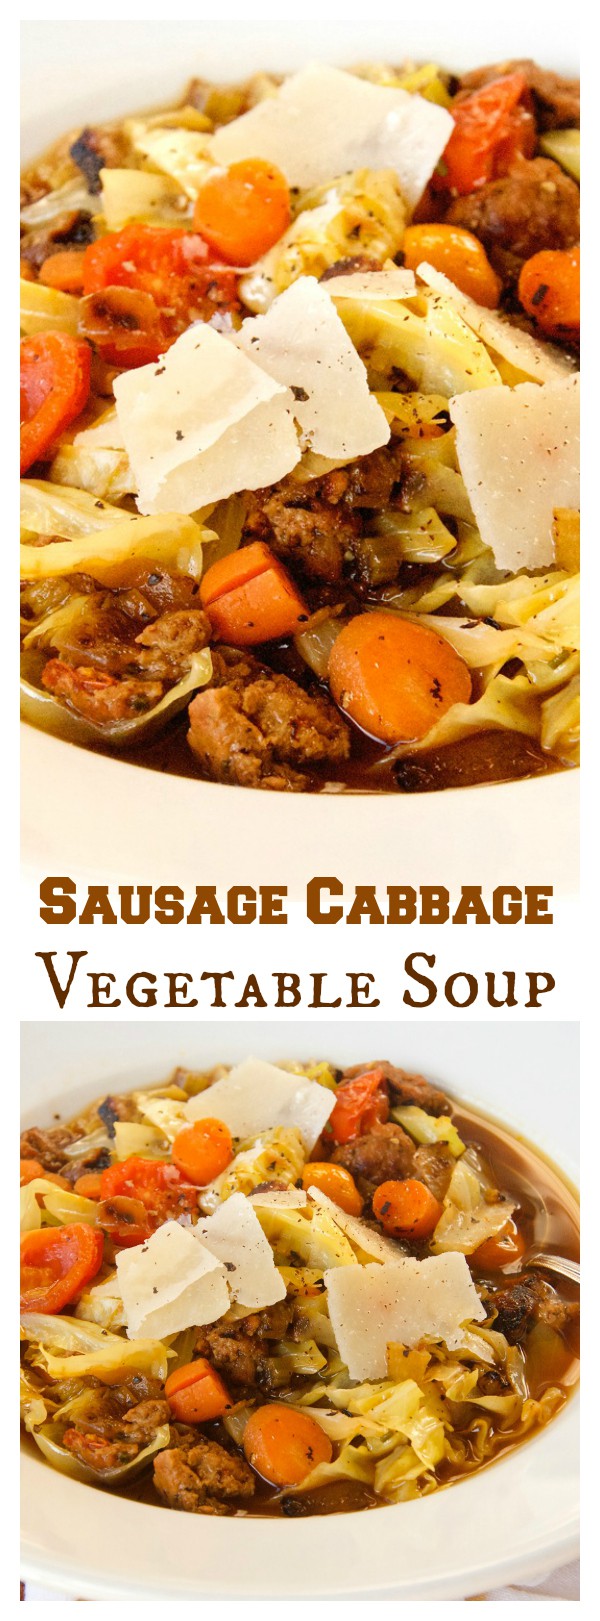 Sausage Cabbage Vegetable Soup